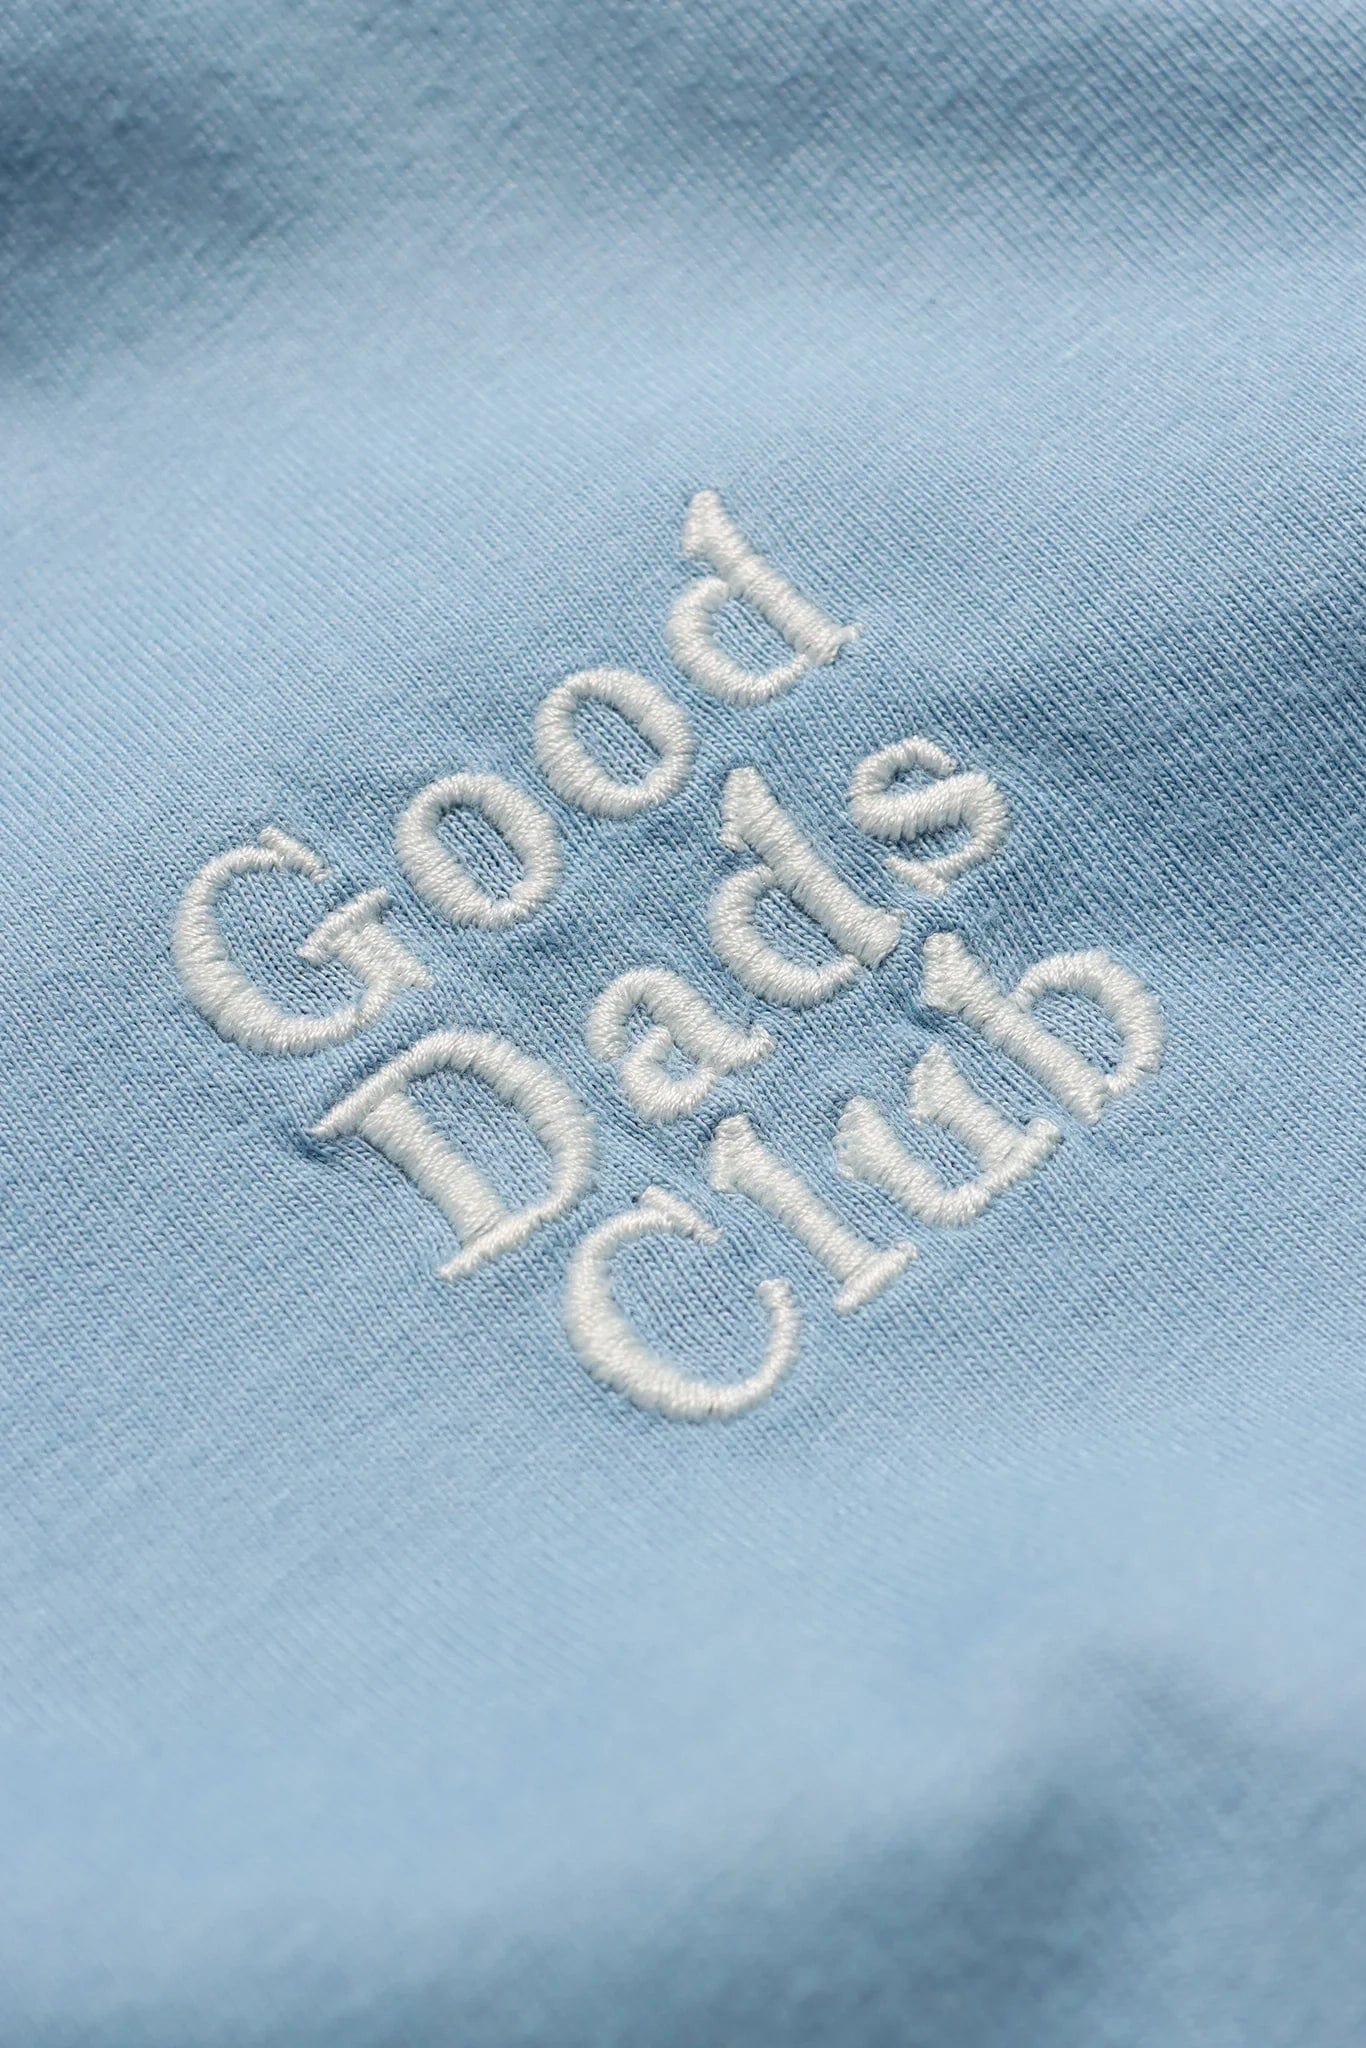 Good Dads Club Tee - Allure Blue